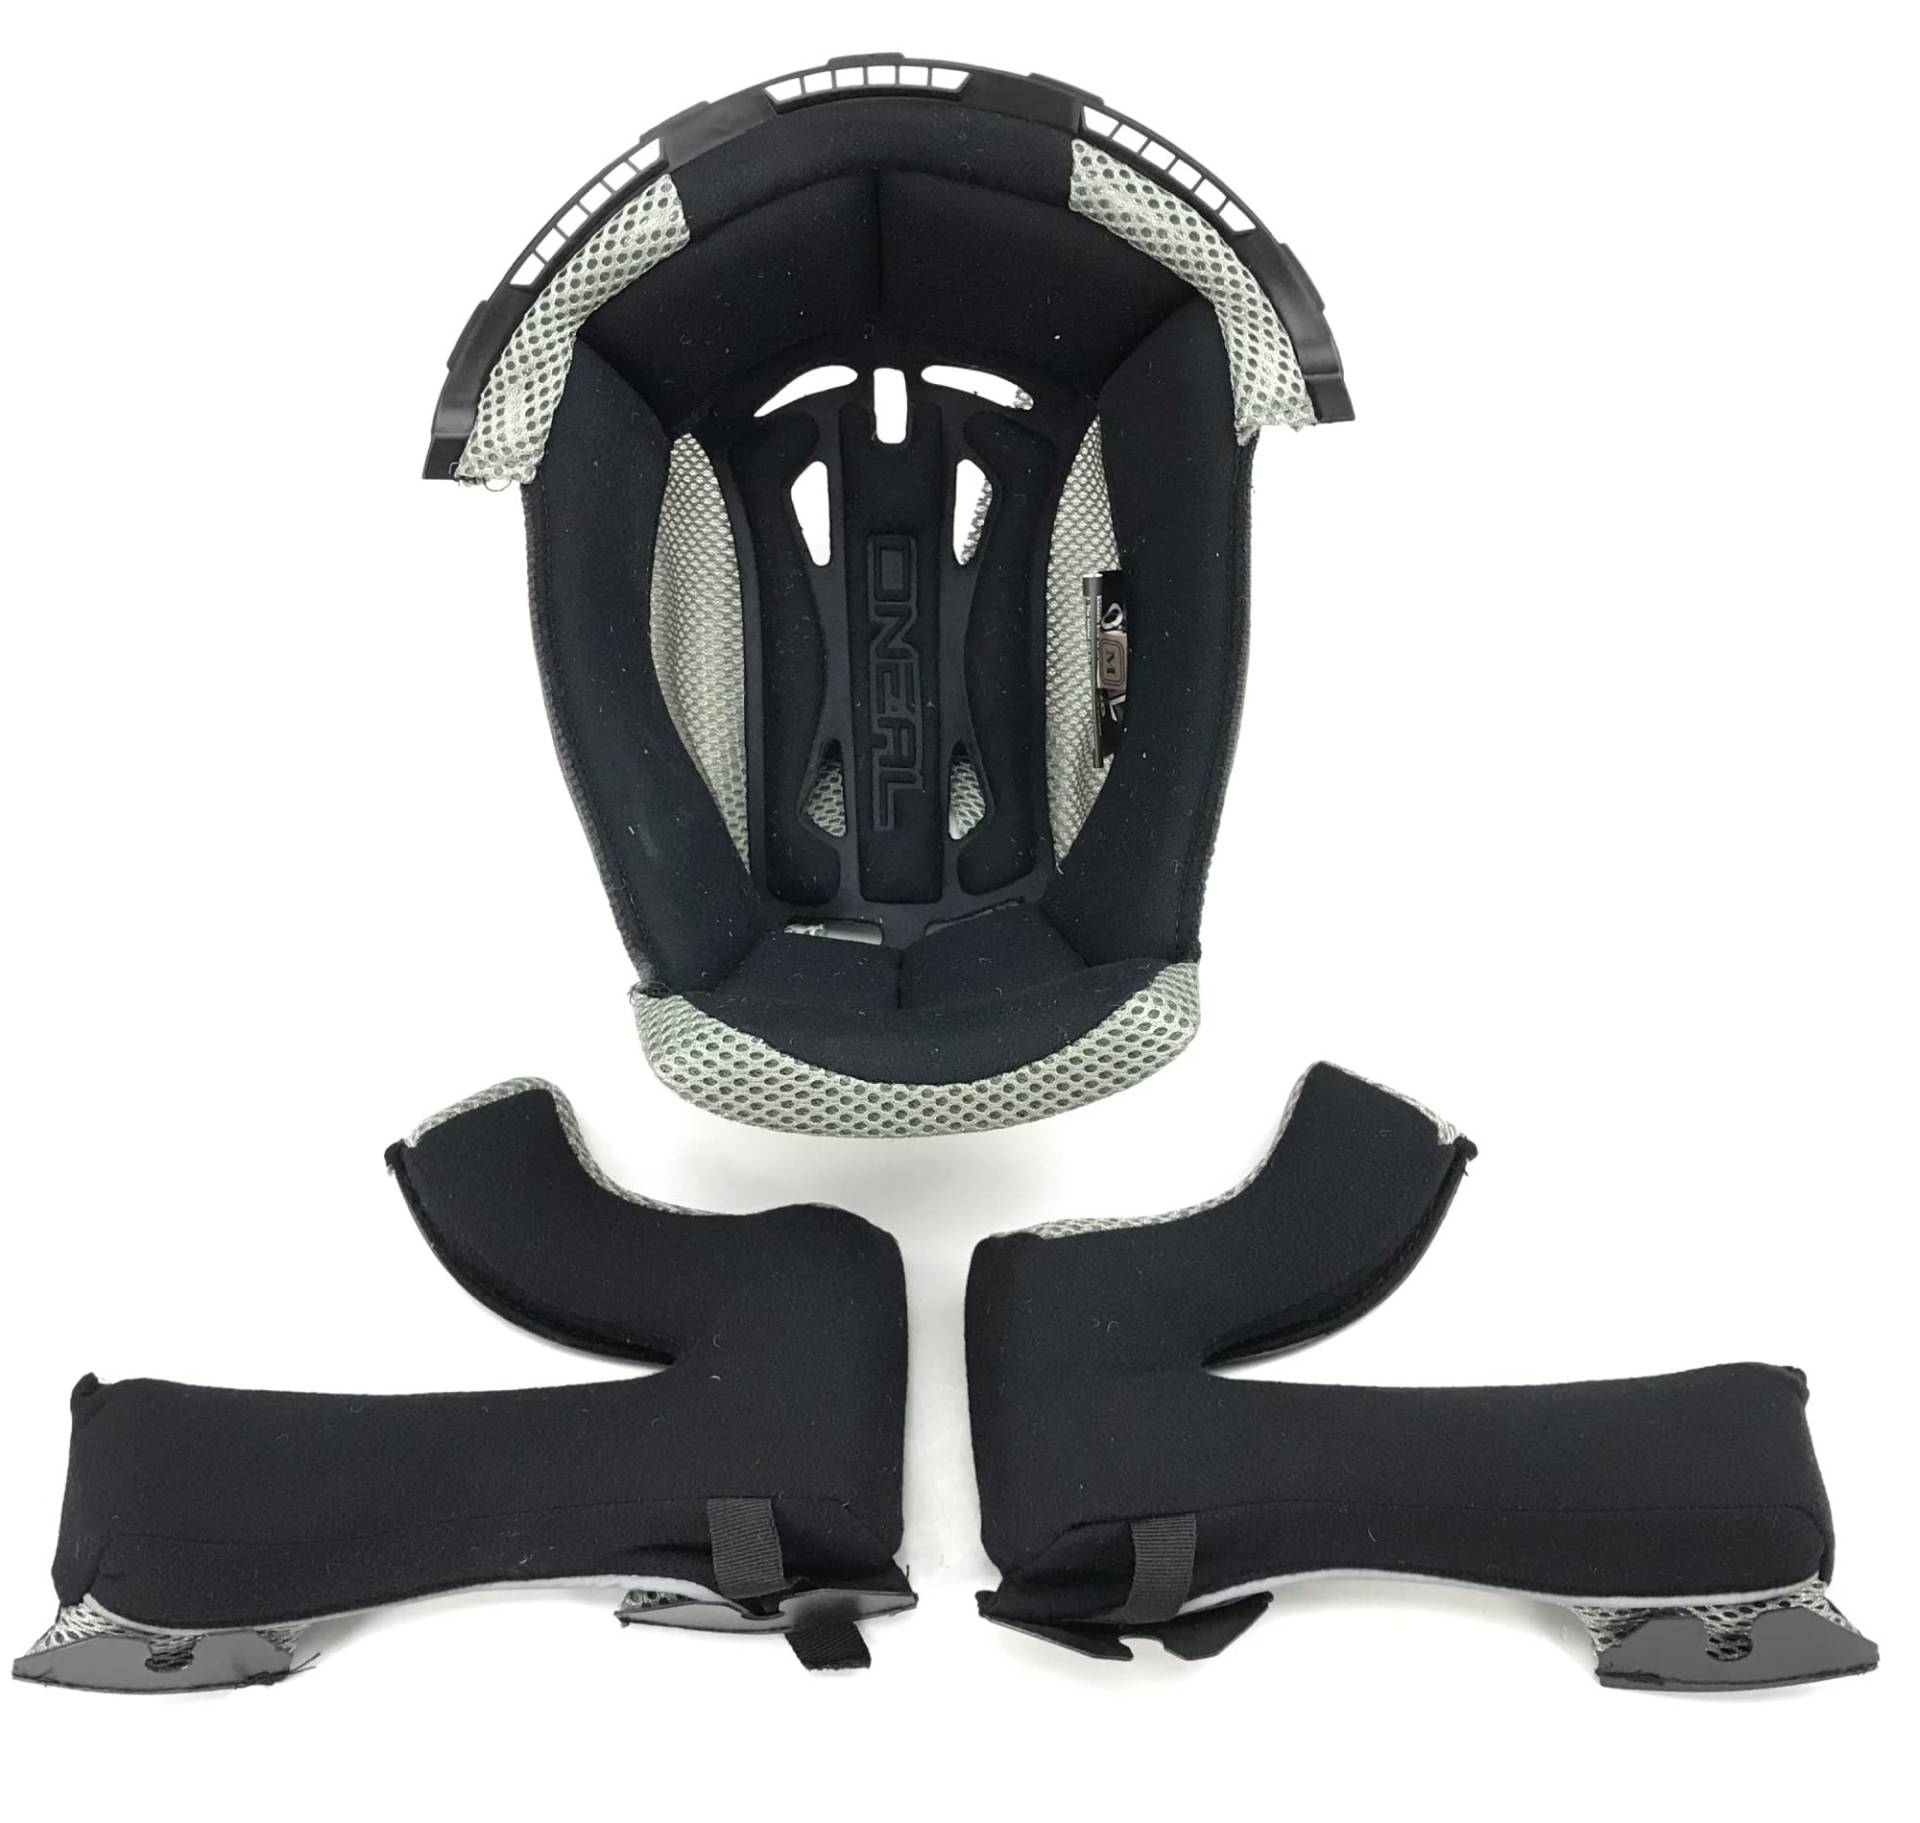 O'NEAL | Motocross-Helm-Ersatzteile | Enduro Motorrad | Innenfutter & Wangenpolster für 5SRS Helm | Liner & Cheek Pads 5SRS Helmet | Schwarz Grau | Größe XL von O'NEAL